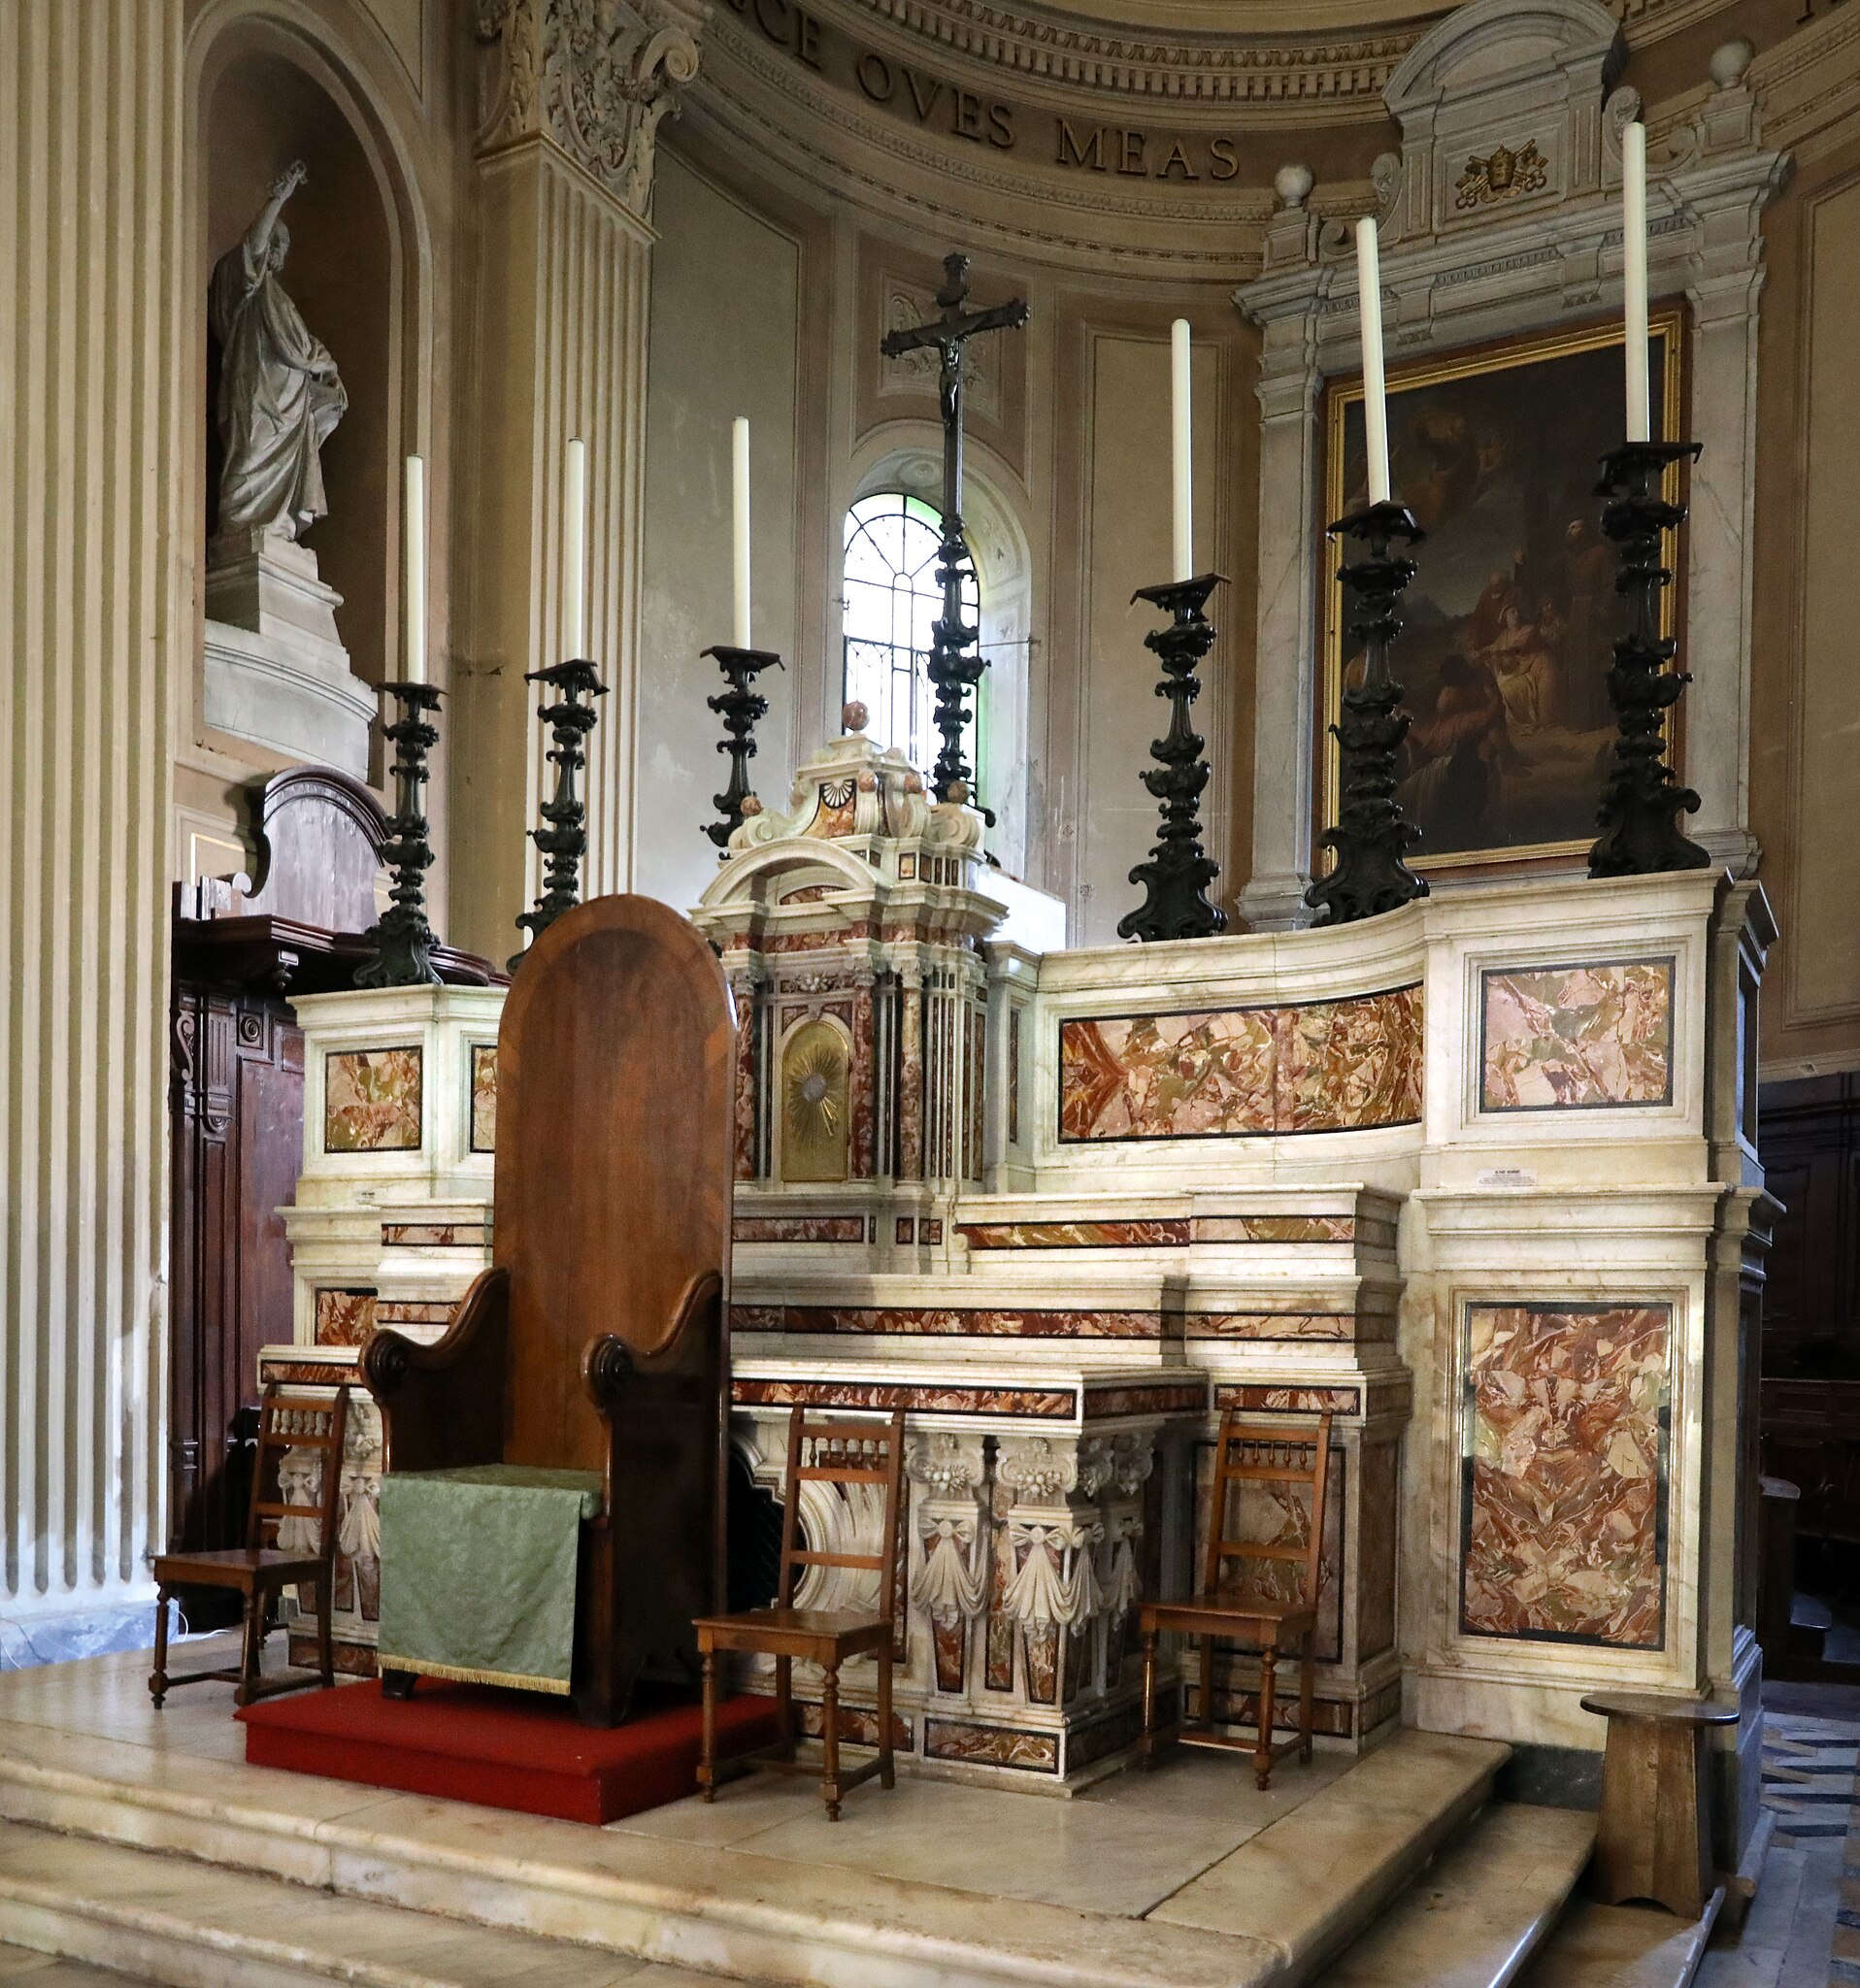 The high altar of Massa Cathedral. Photo: Francesco Bini